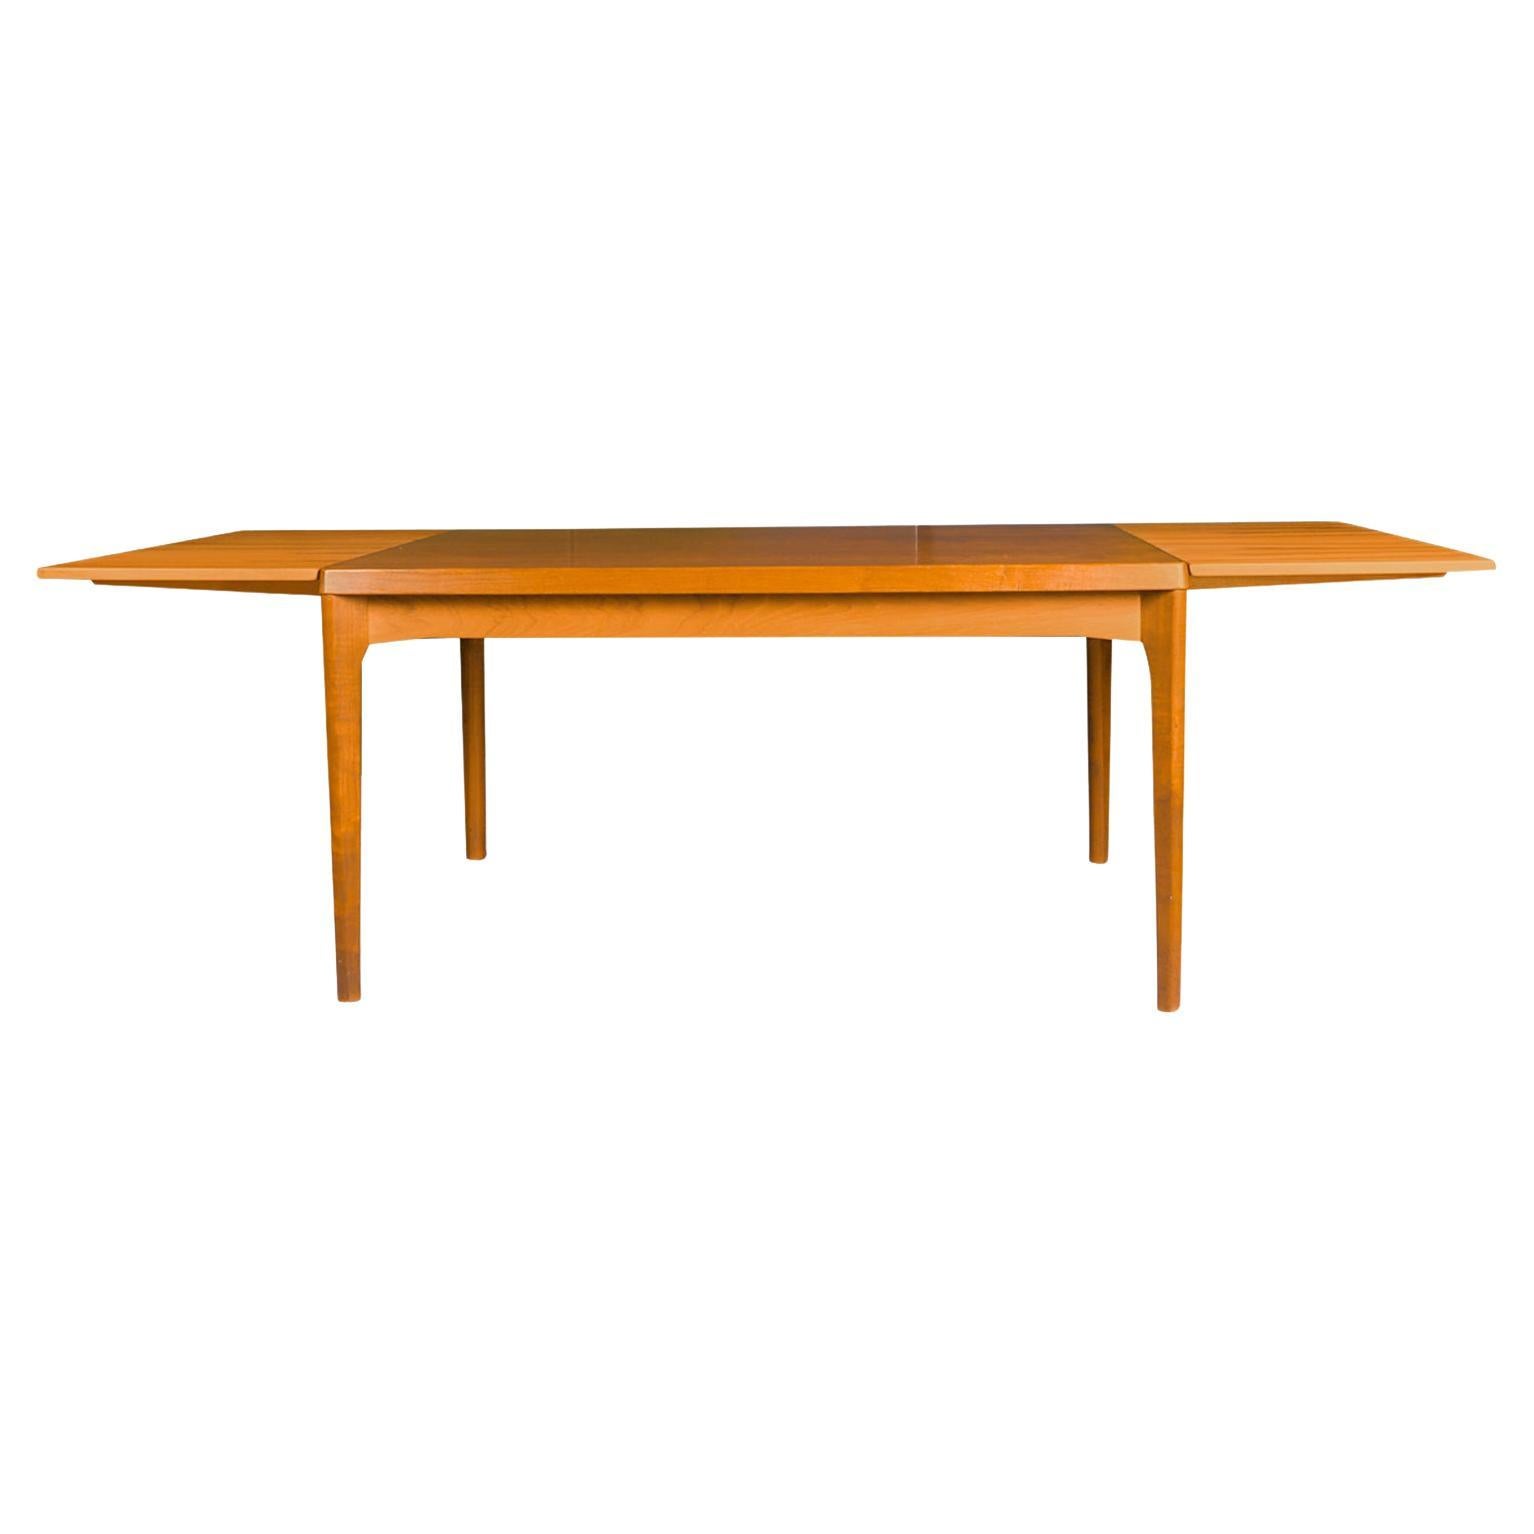 Danish Teak Large Extendable Draw Leaf Dining Table